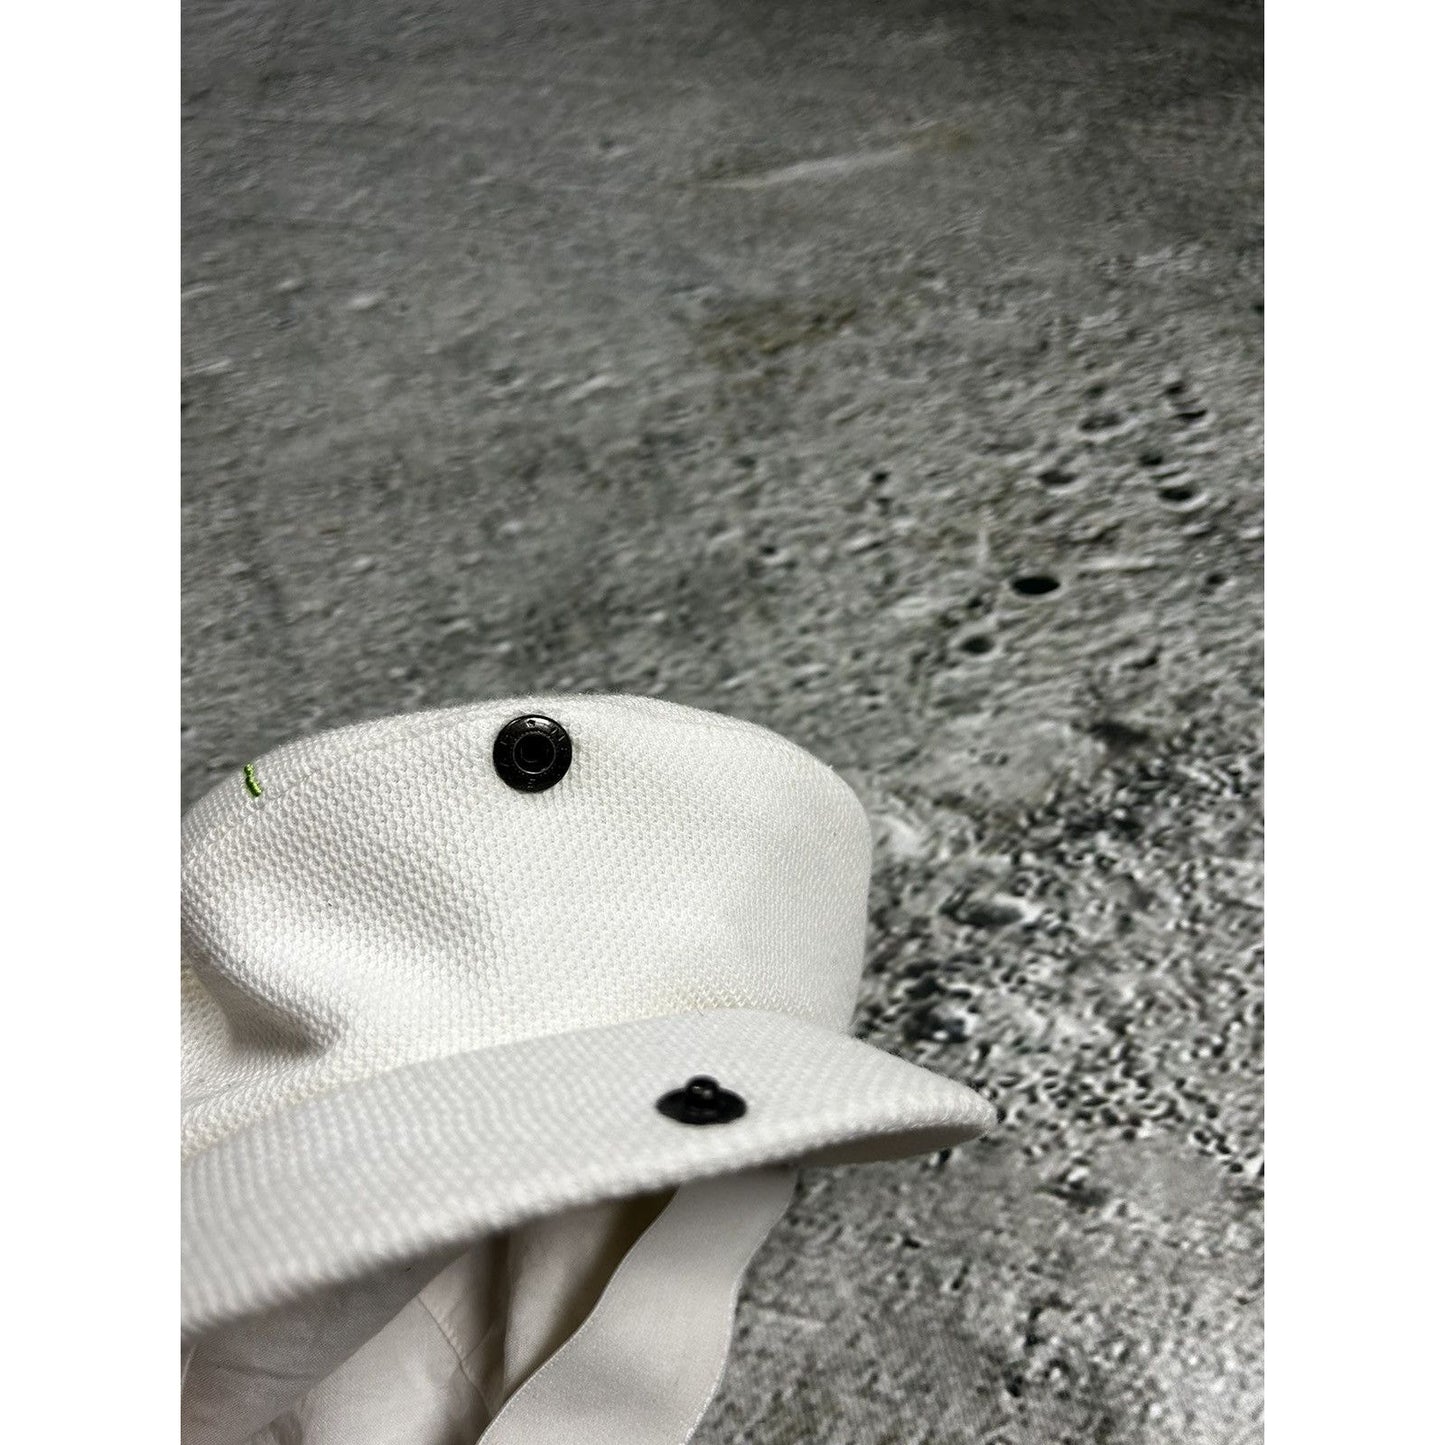 Nike Air Max vintage flat hat white cap rare